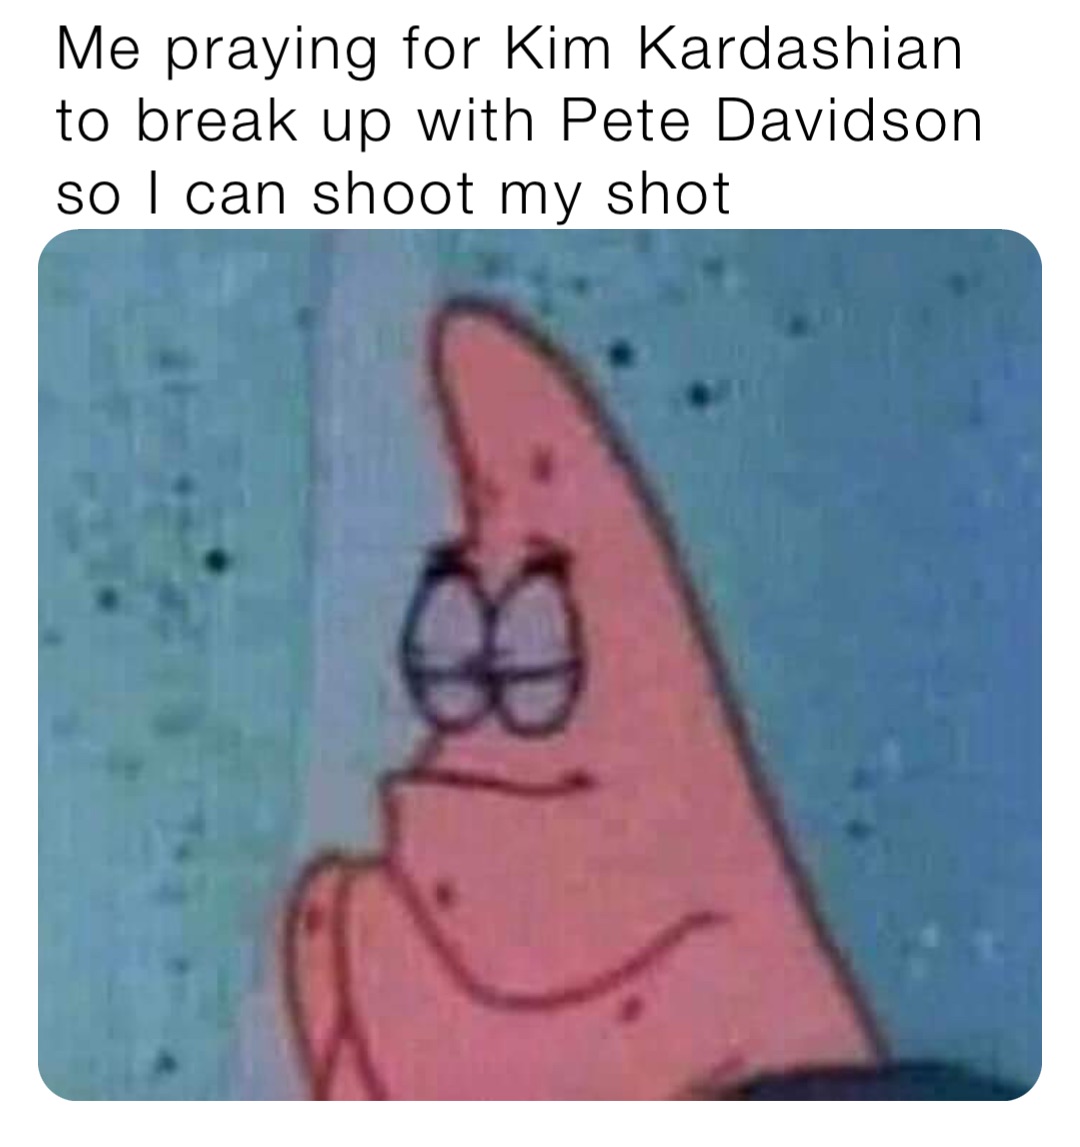 Me praying for Kim Kardashian to break up with Pete Davidson so I can shoot my shot